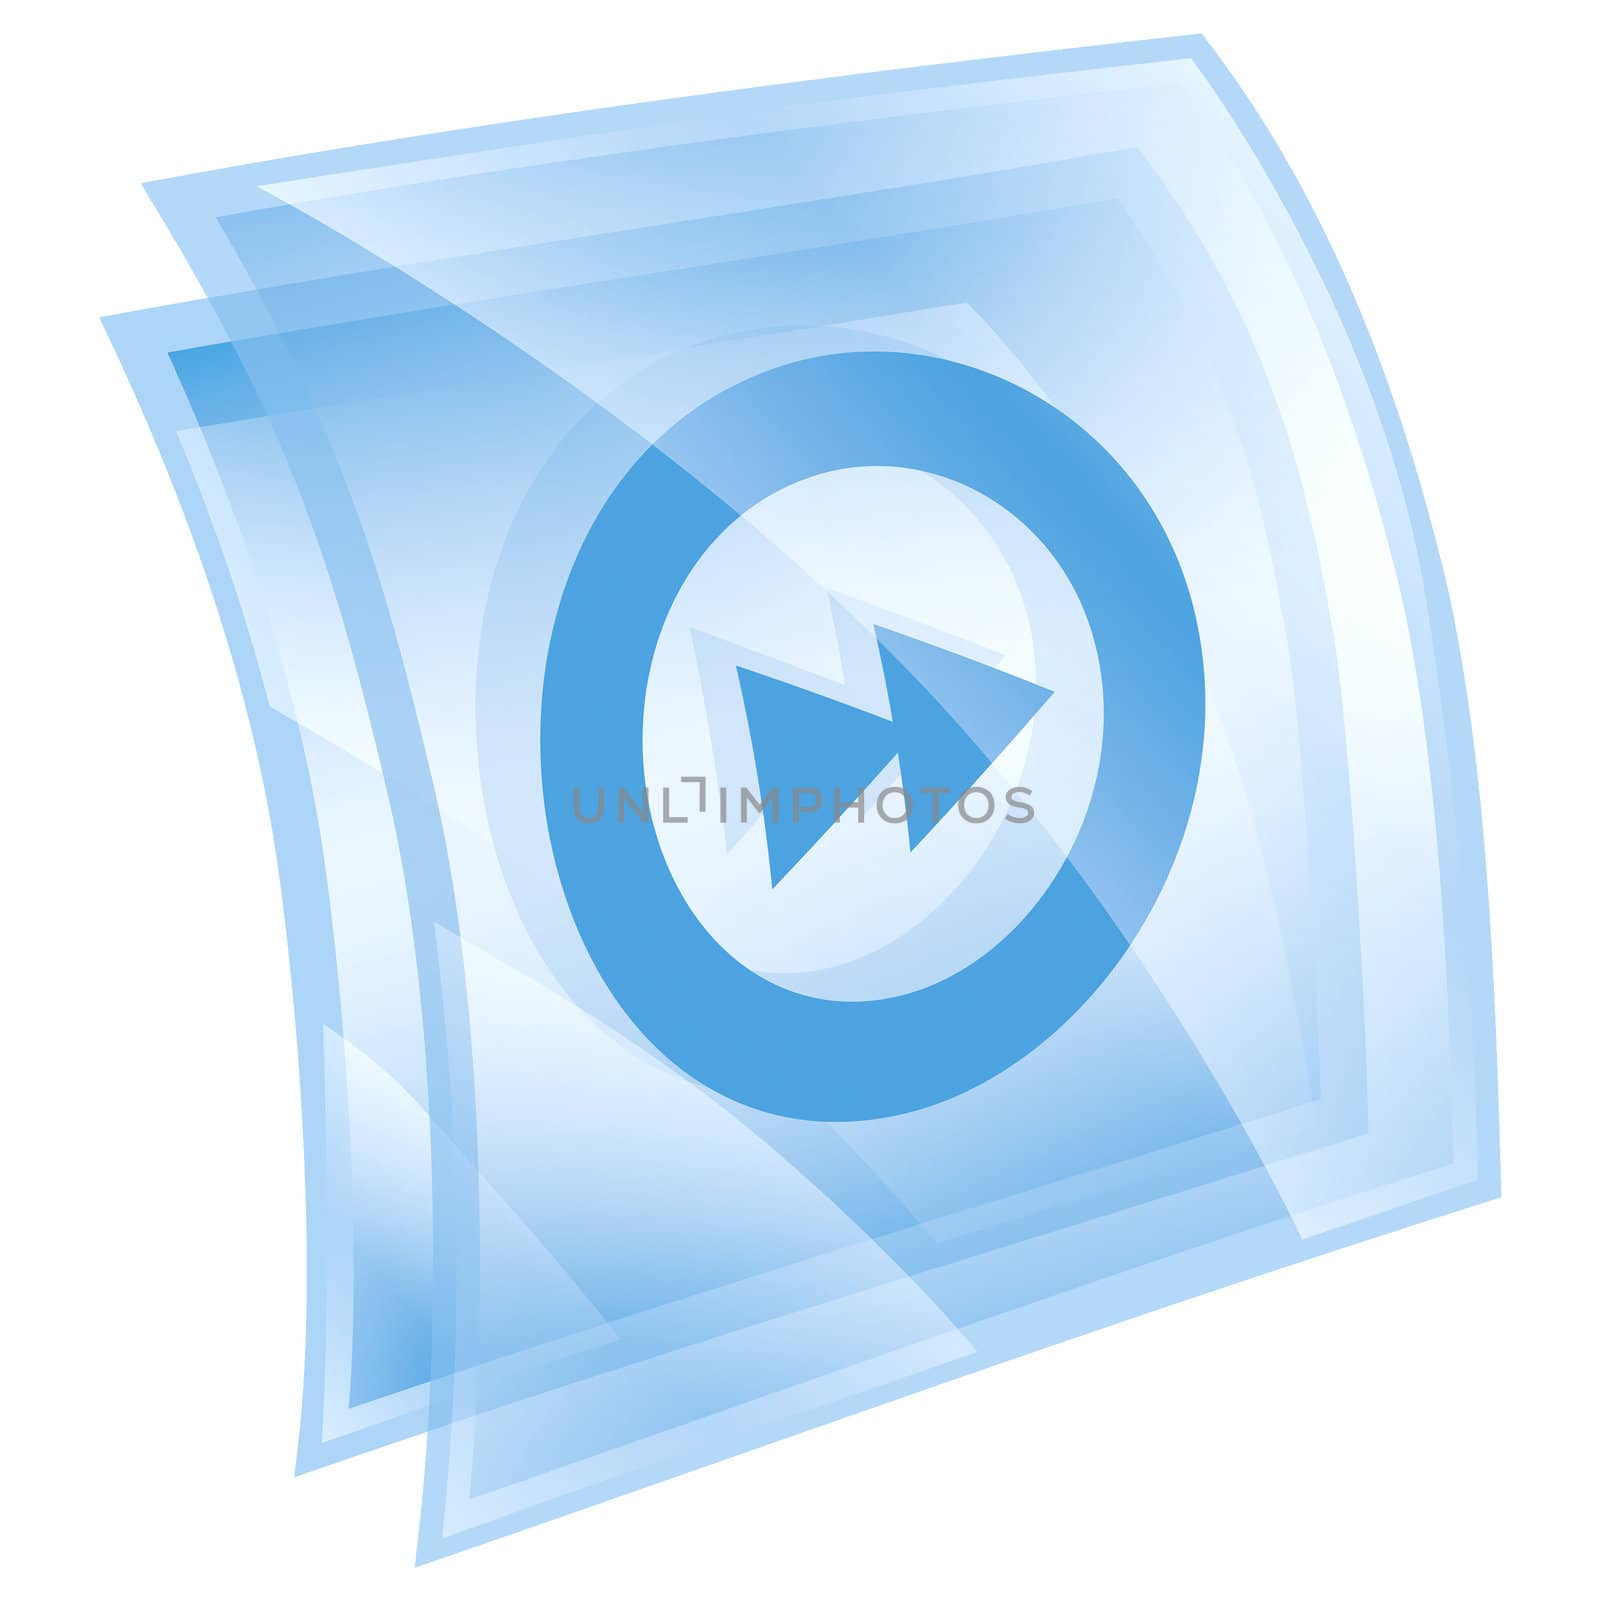 Rewind Forward icon blue, isolated on white background.